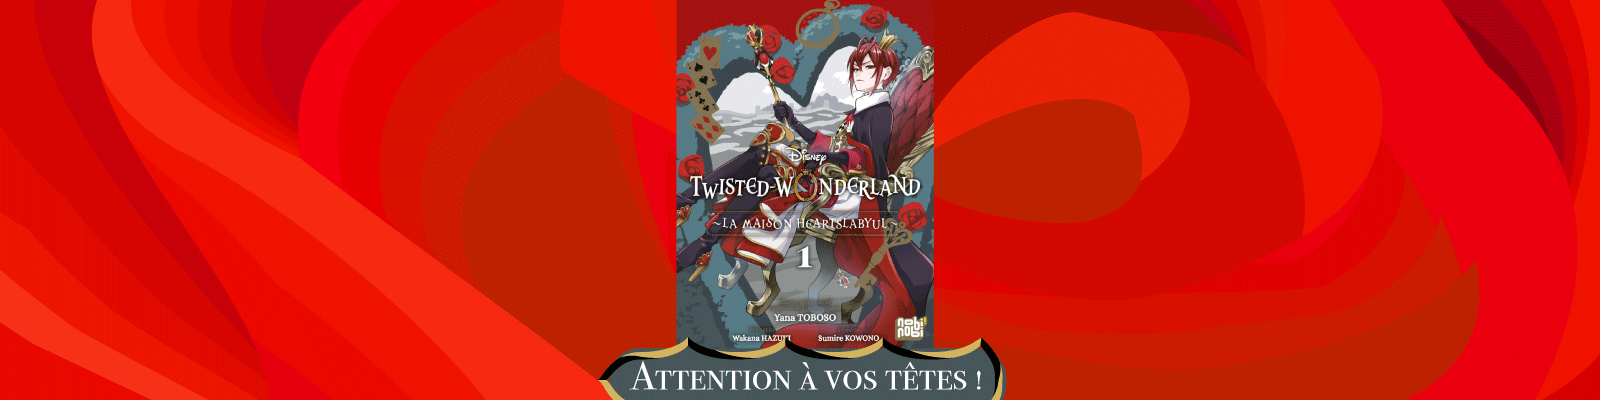 Twisted-Wonderland